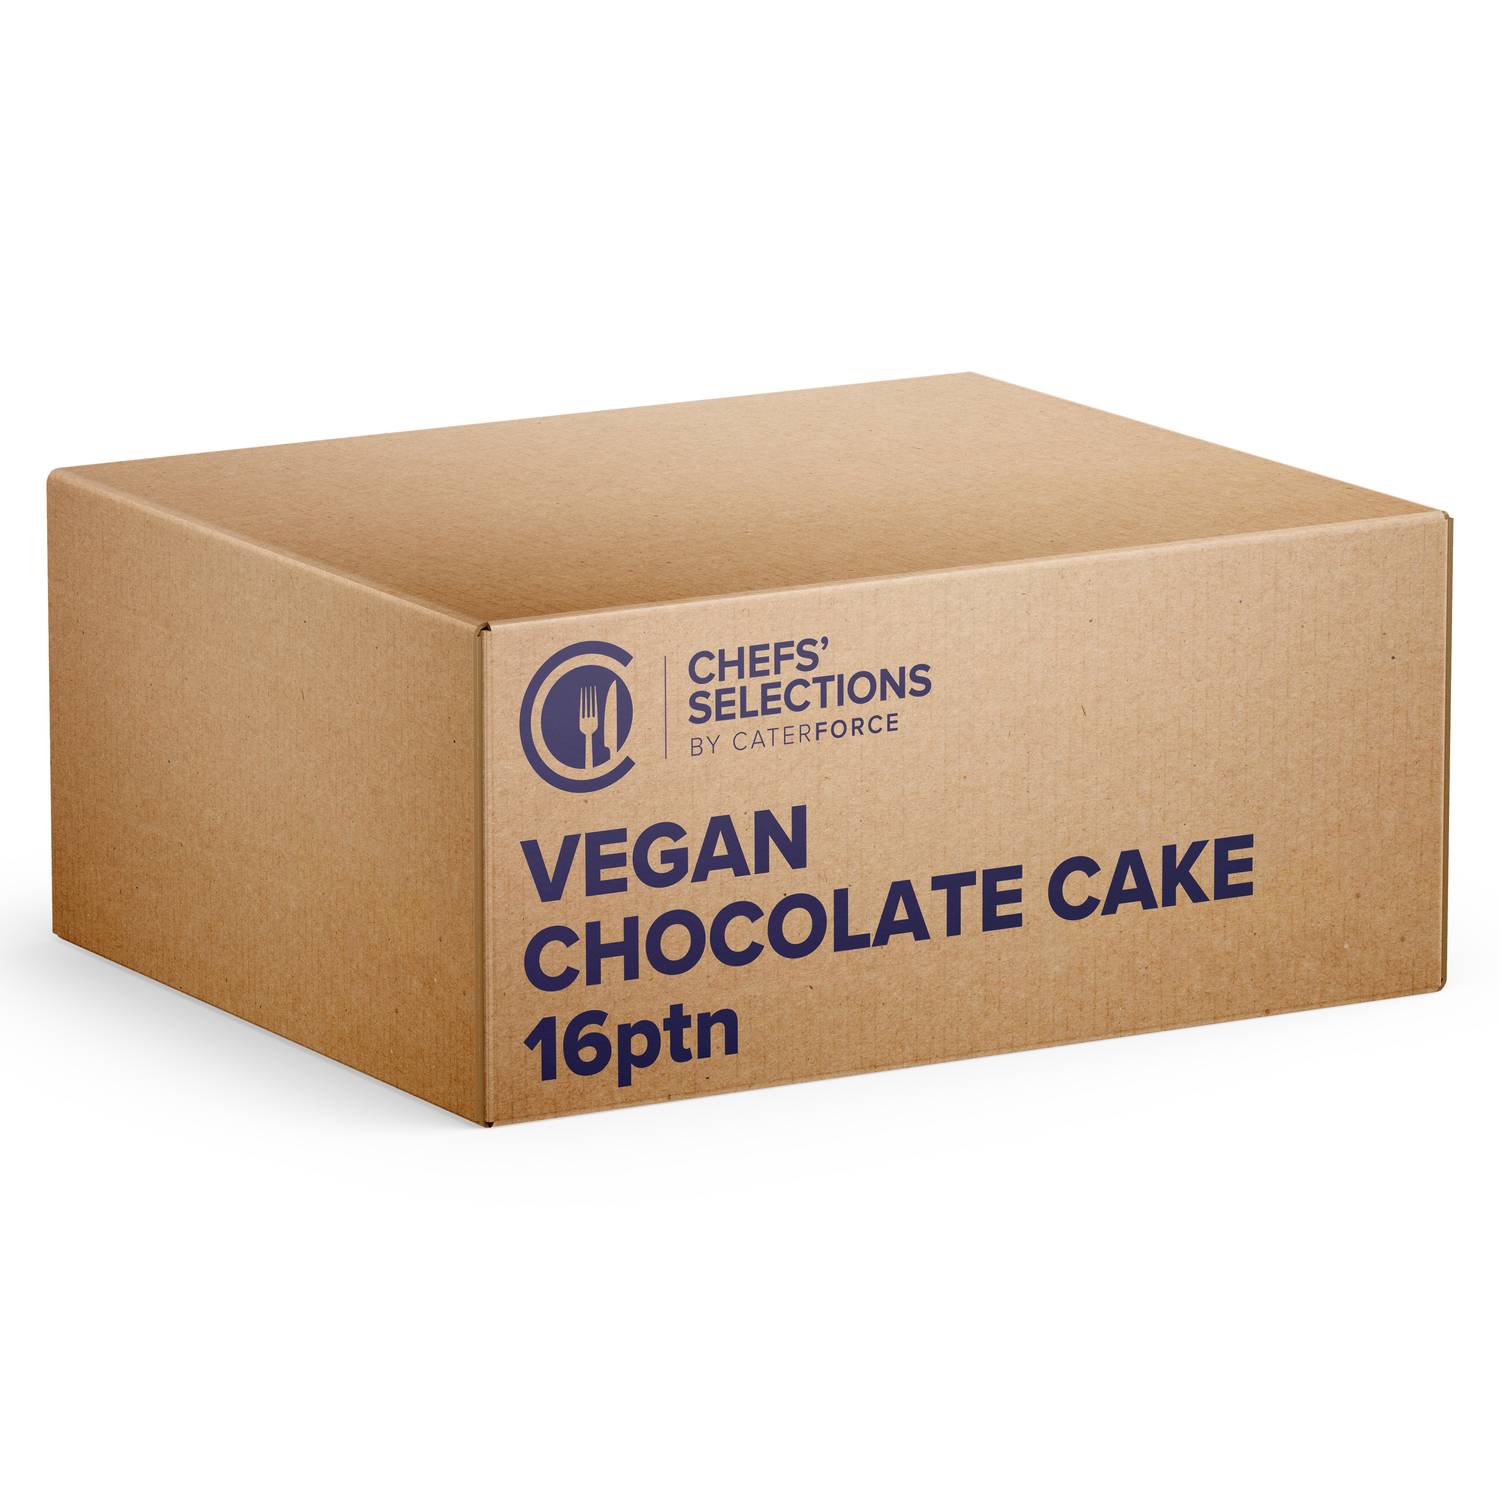 Chefs’ Selections Vegan Chocolate Cake (1 x 16p/ptn)